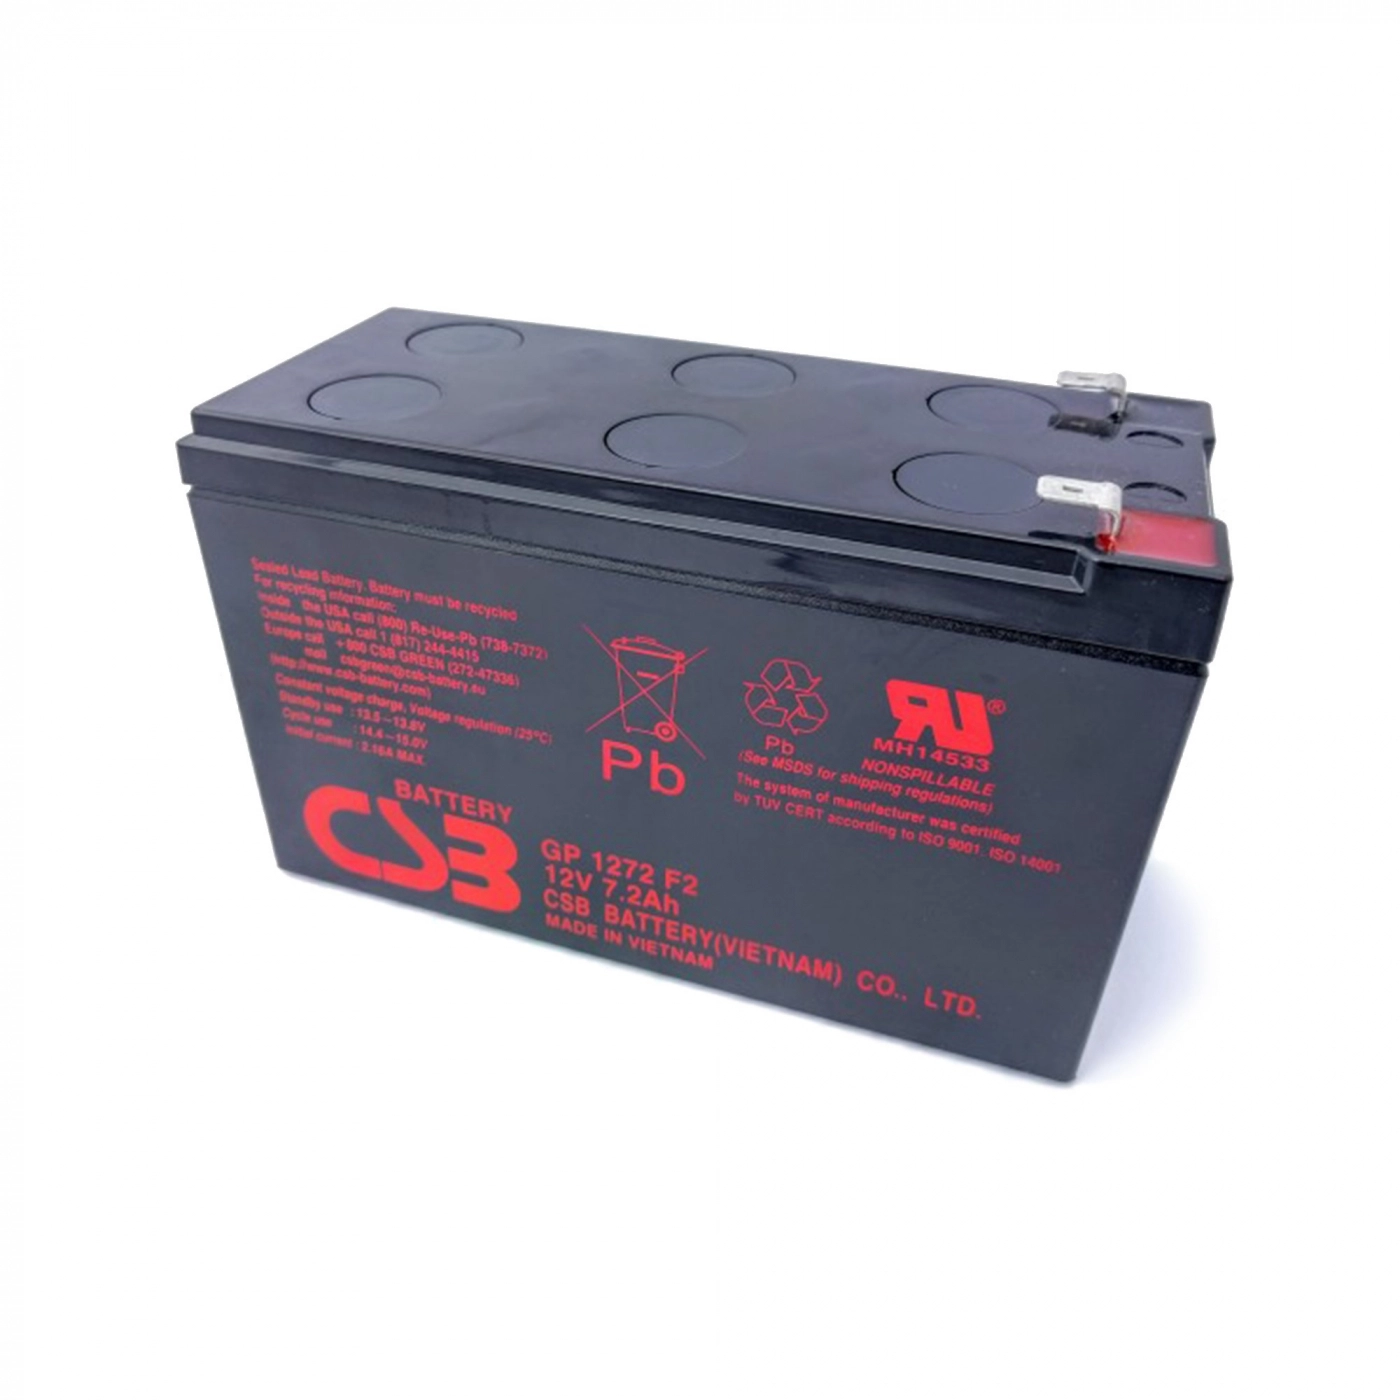 Купить Батарея к ИБП CSB GP1272 F2 12V-7Ah - фото 1